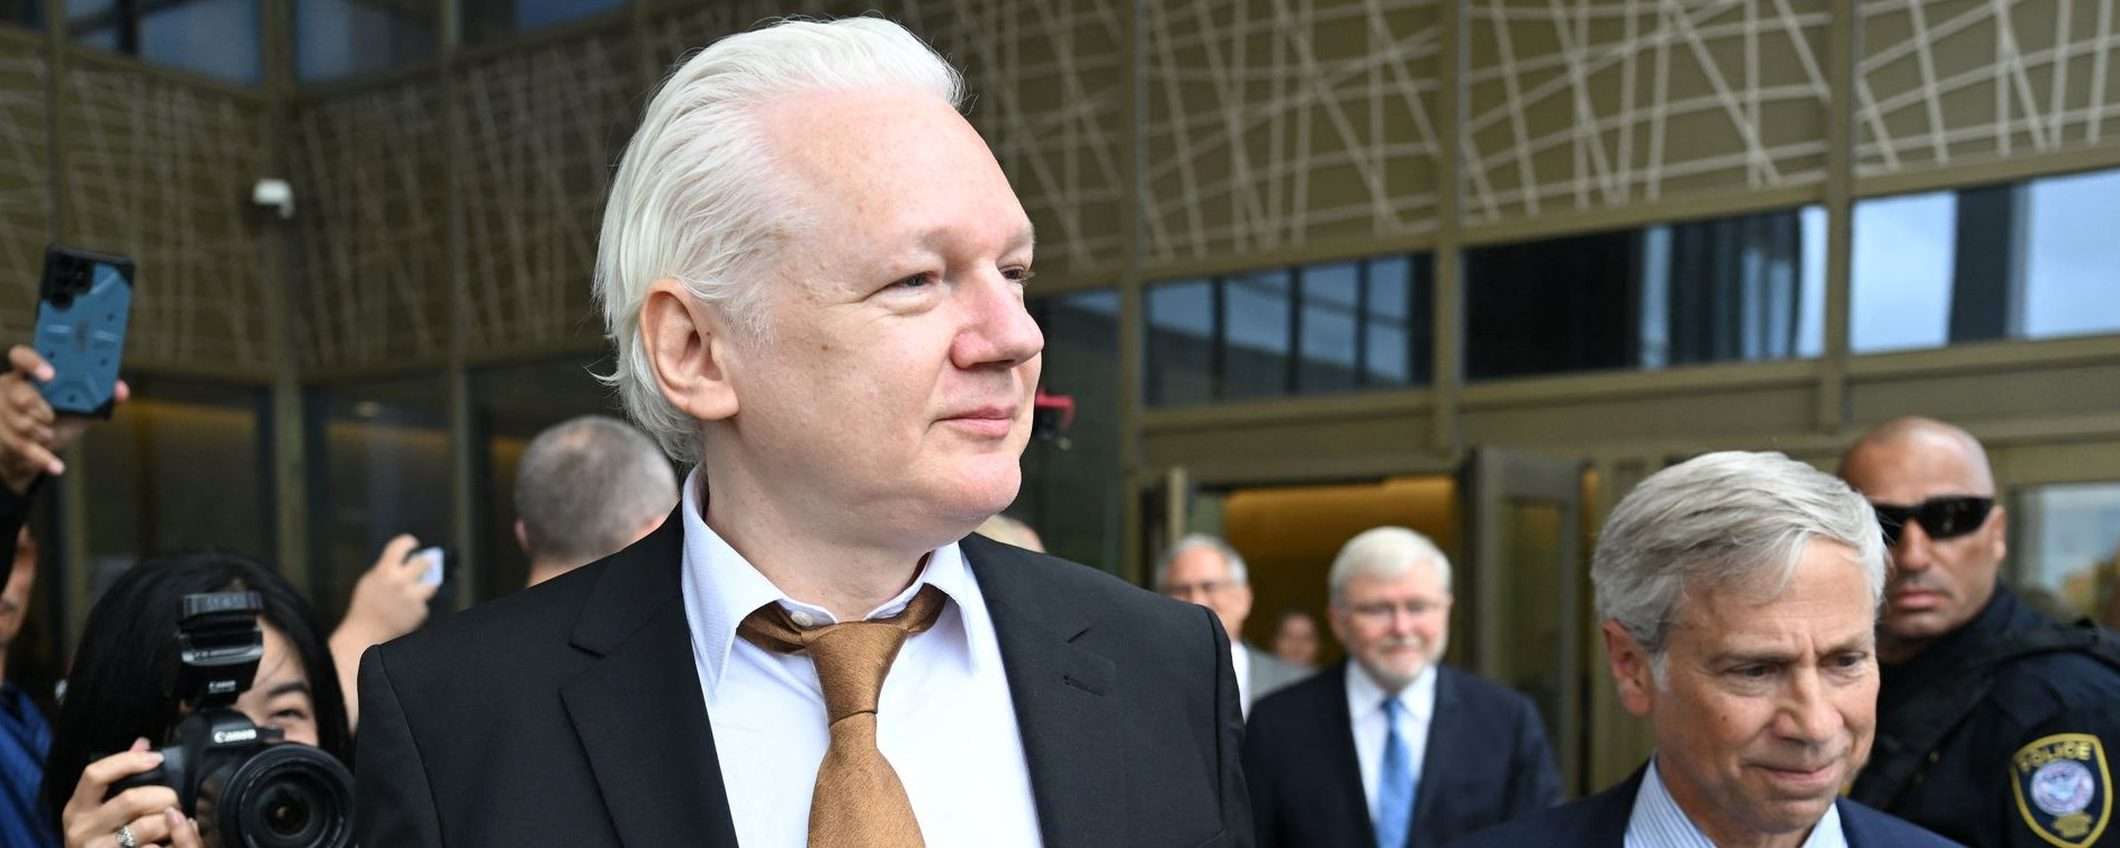 Julian Assange si dichiara colpevole e torna libero